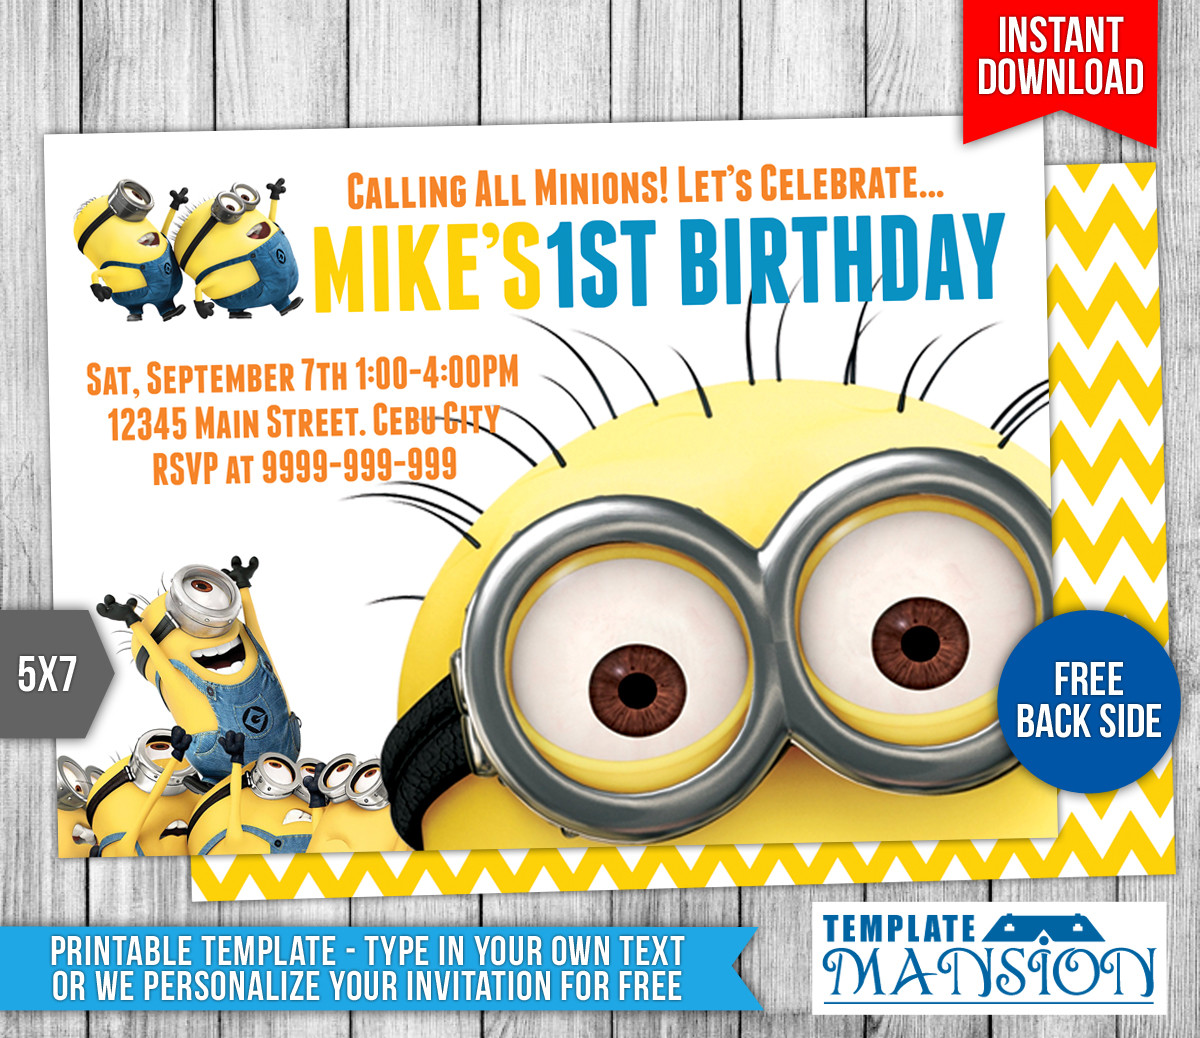 Minions Birthday Party Invitation
 Minions Birthday Invitation 6 by templatemansion on